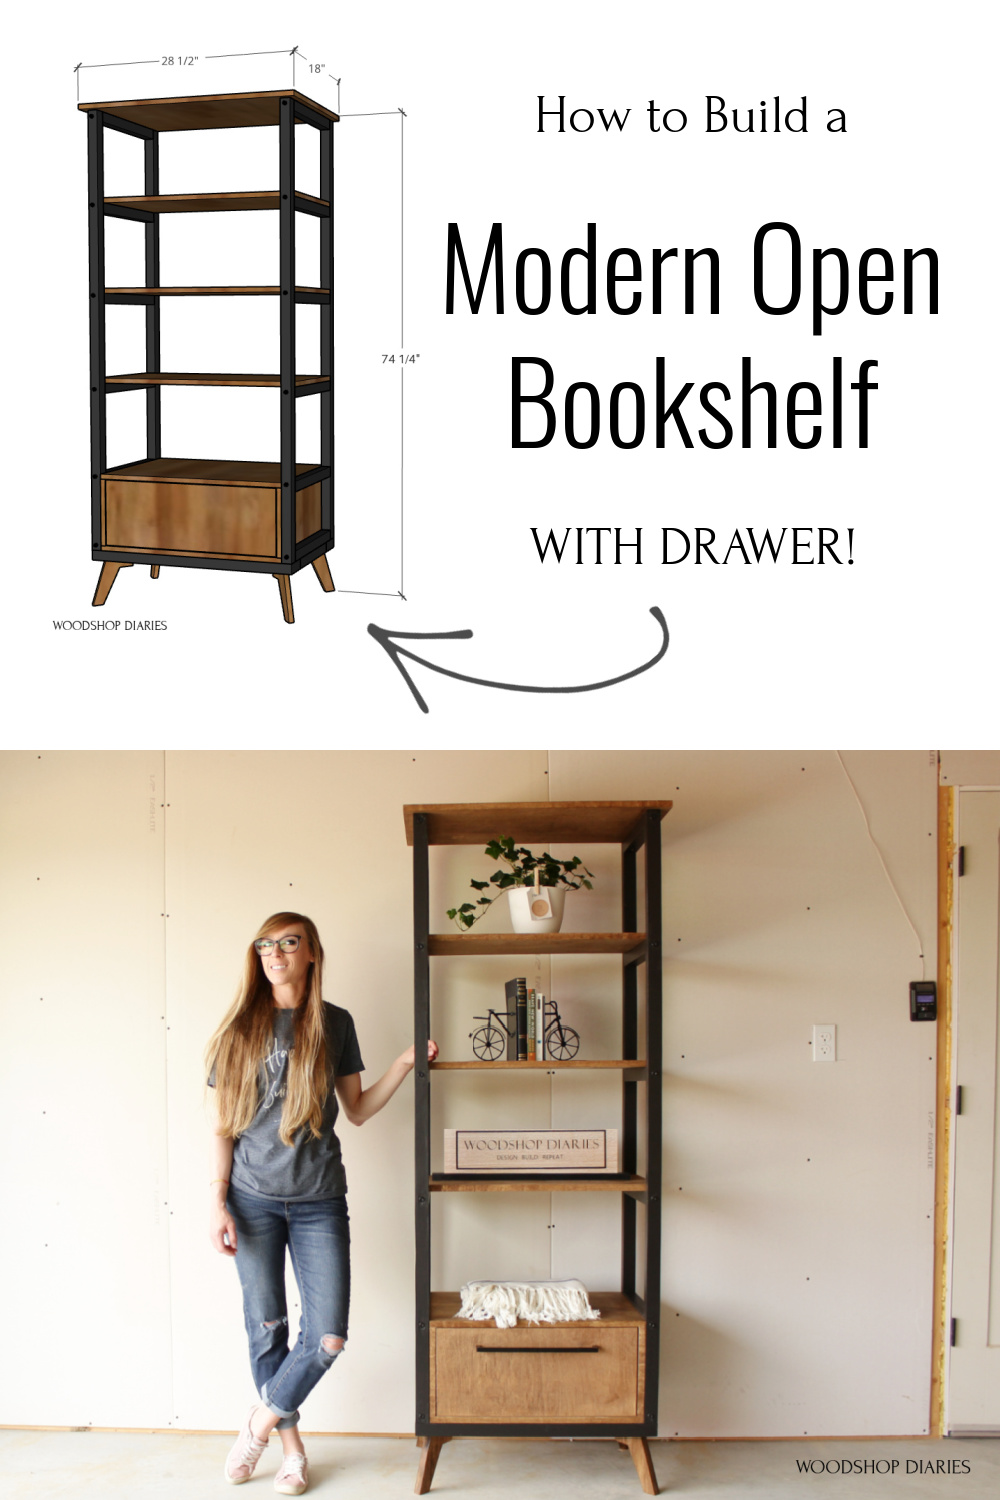 https://www.woodshopdiaries.com/wp-content/uploads/2021/05/modern-open-bookshelf-with-drawer.jpg